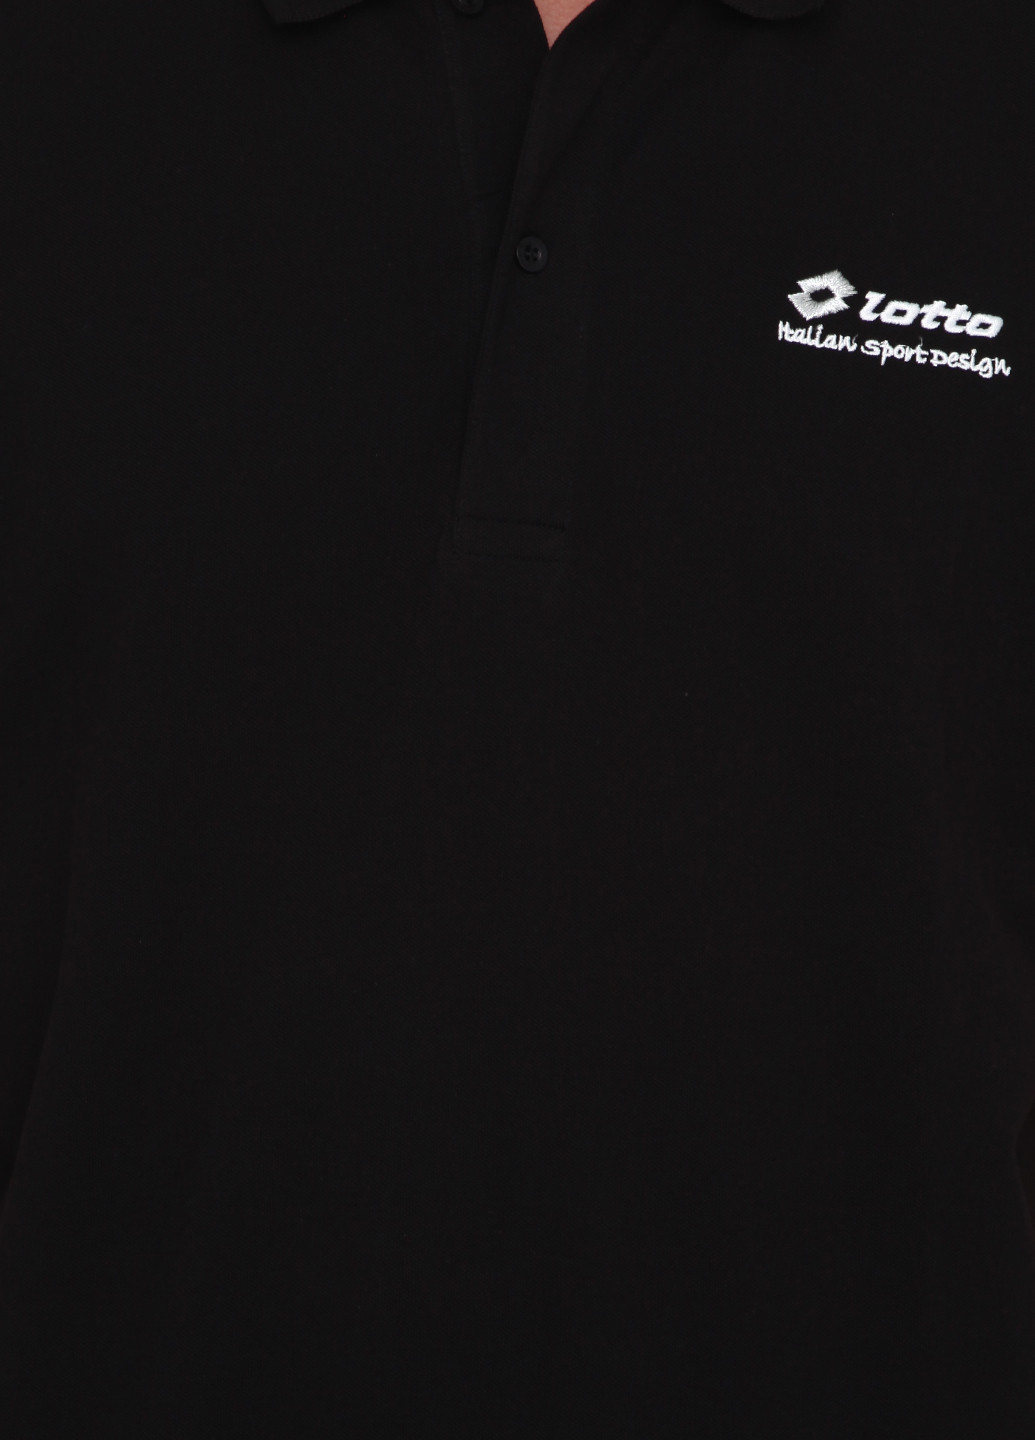 Черная футболка-поло для мужчин Lotto с логотипом